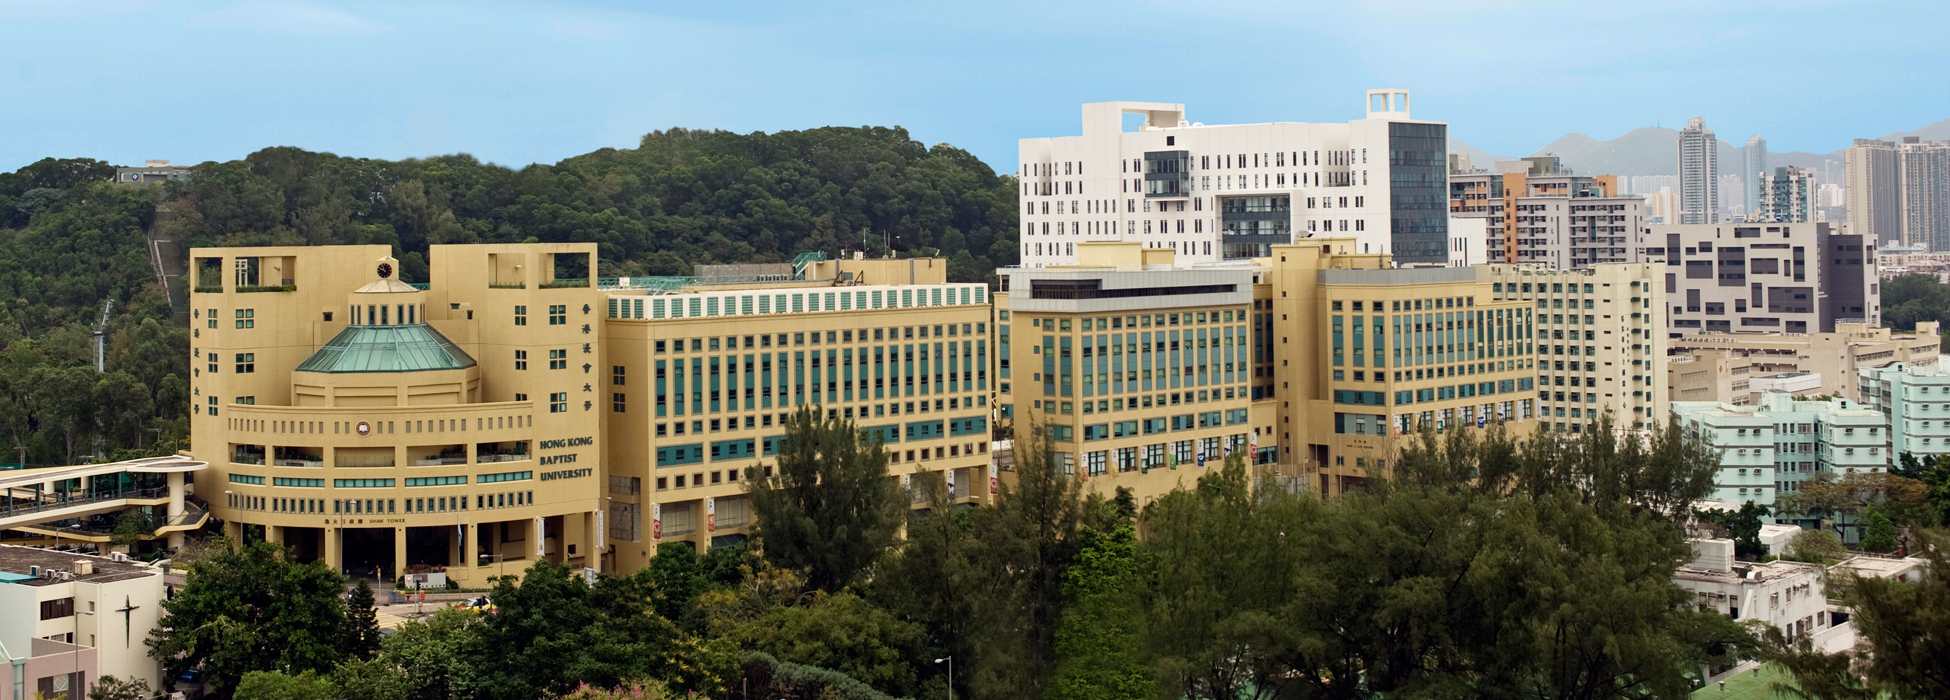 Hong Kong Baptist University | World University Rankings | THE